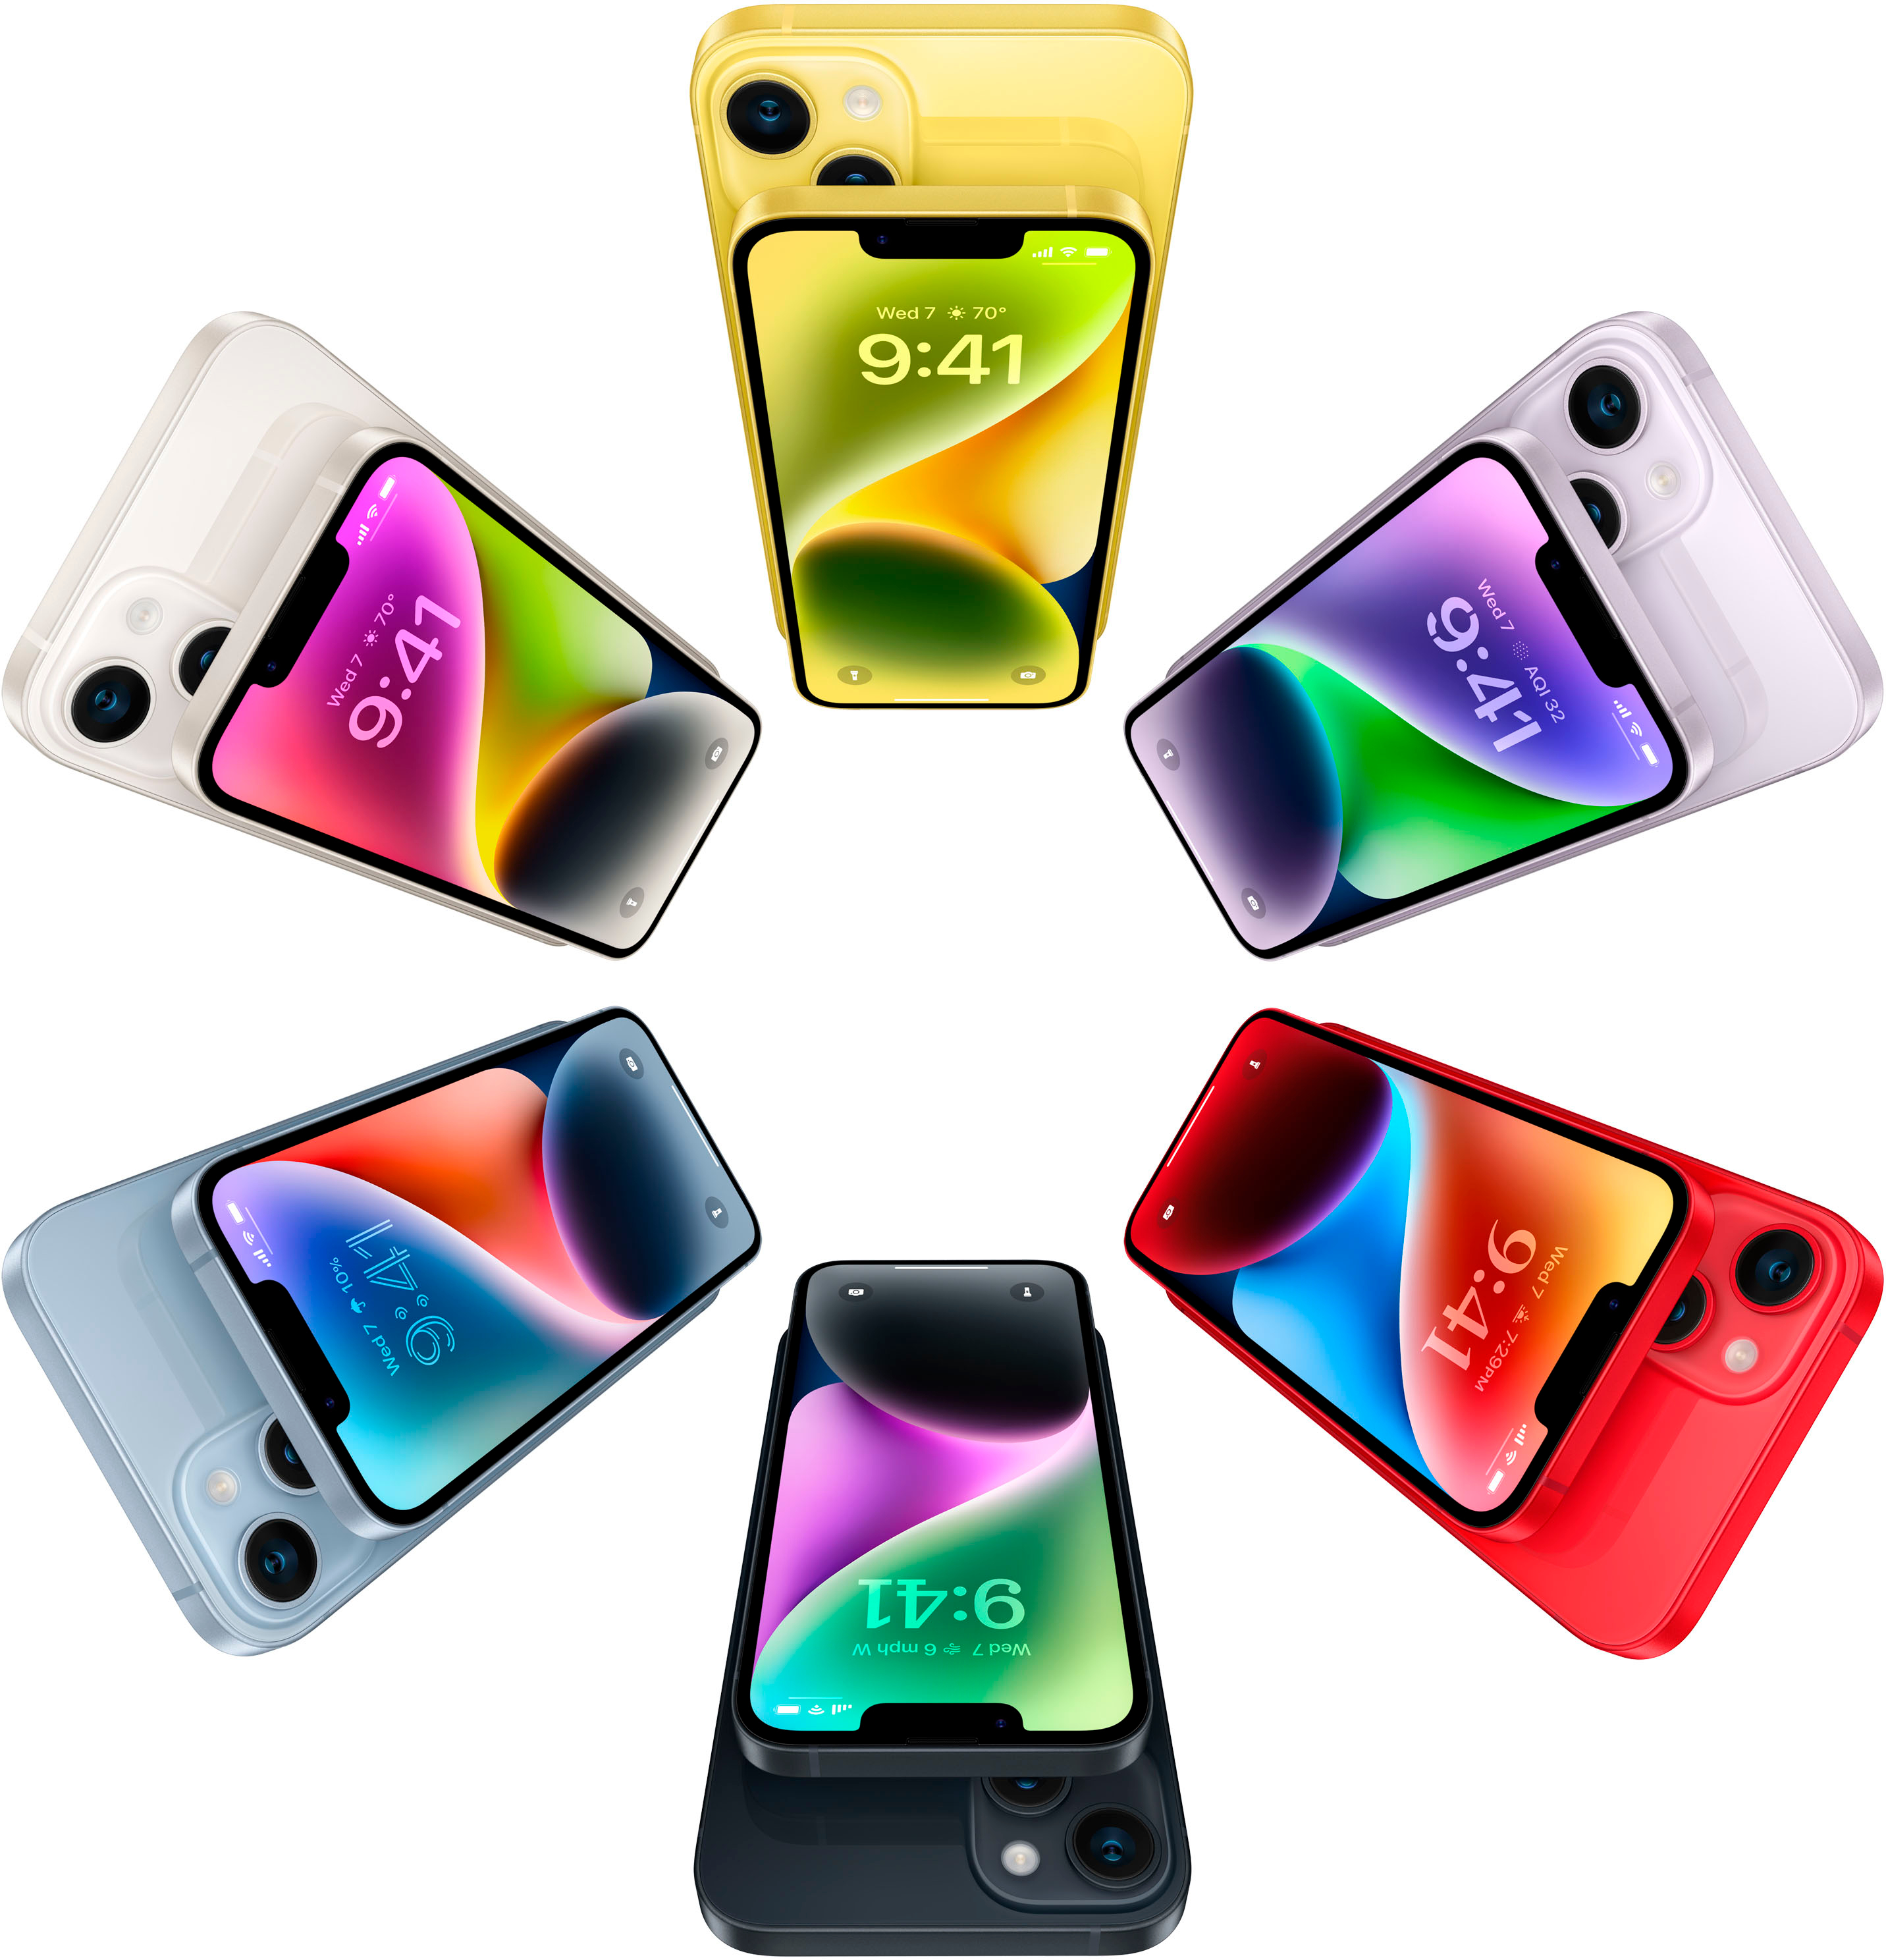 Buy iPhone 14 256GB Yellow - Apple